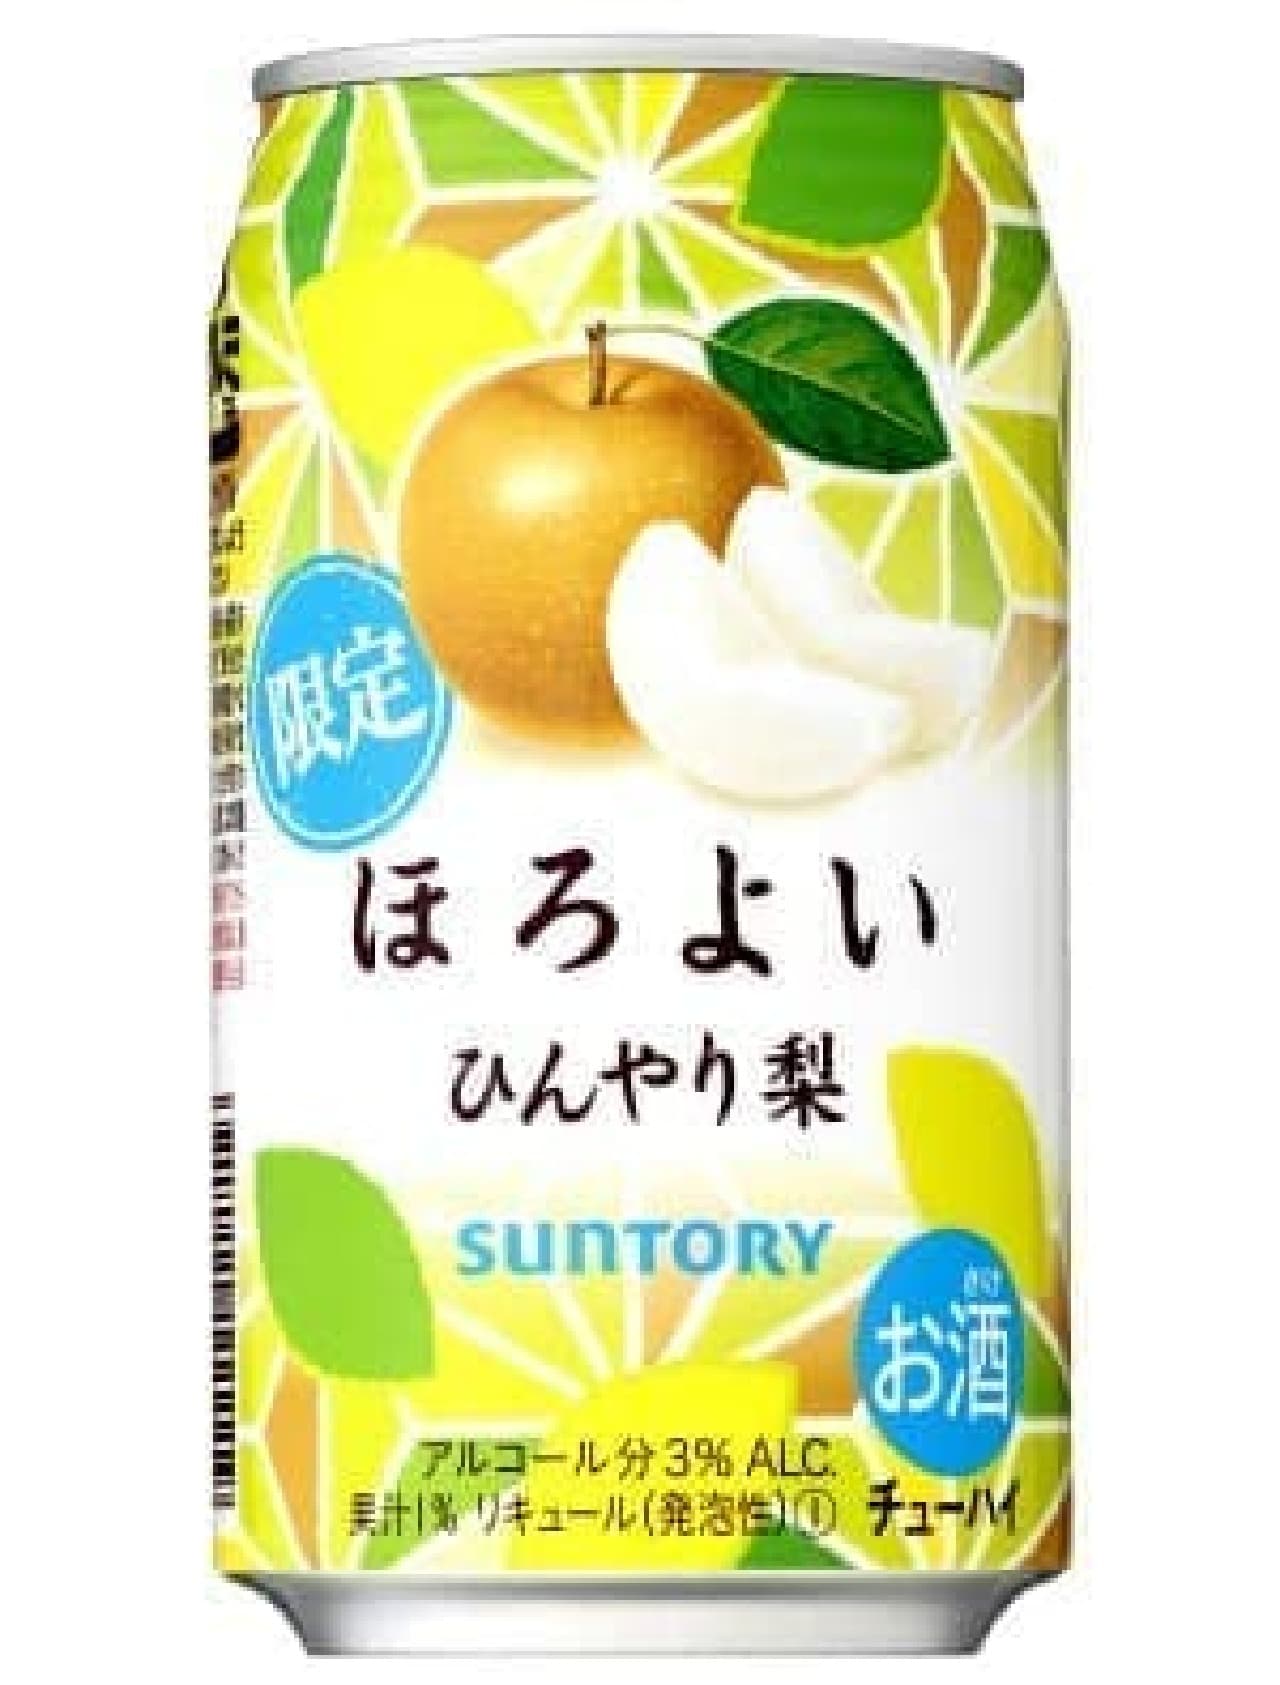 Suntory Chu-Hi "Horoyoi [Cool Pear]"